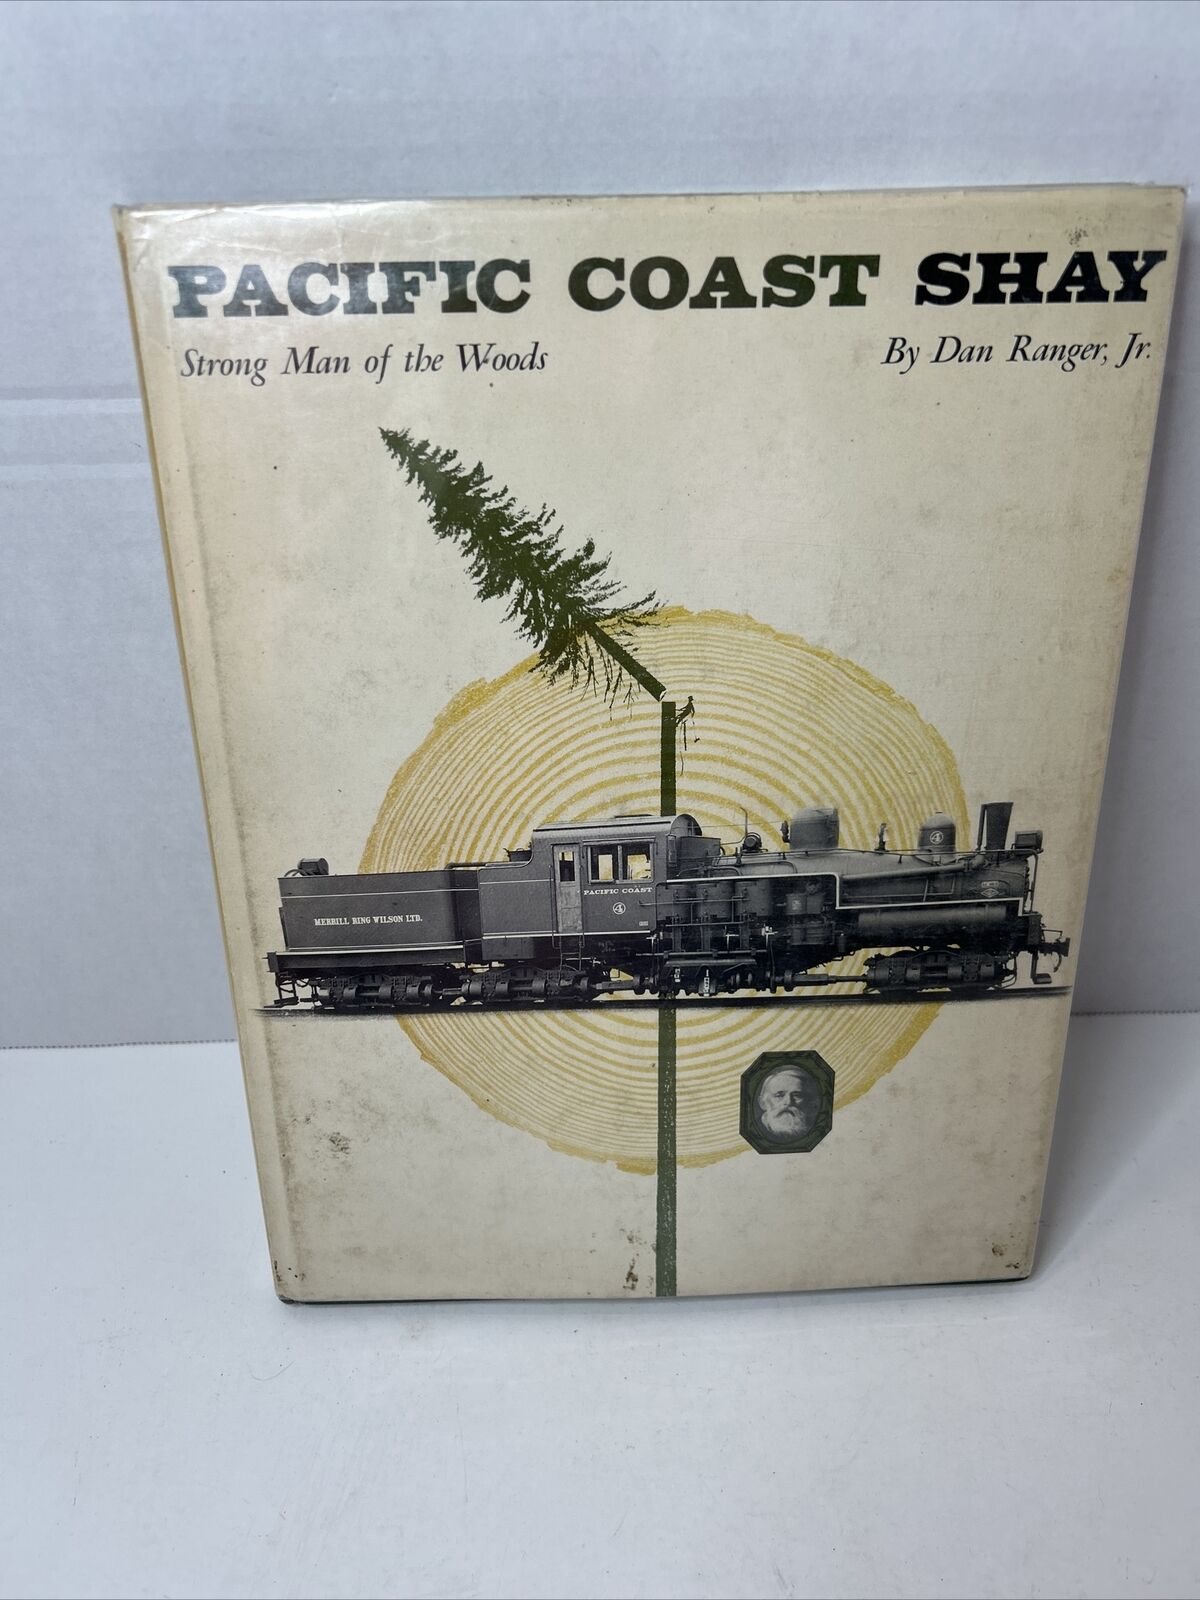 Pacific Coast Shay by Dan Ranger Jr. ©1964 HC Book